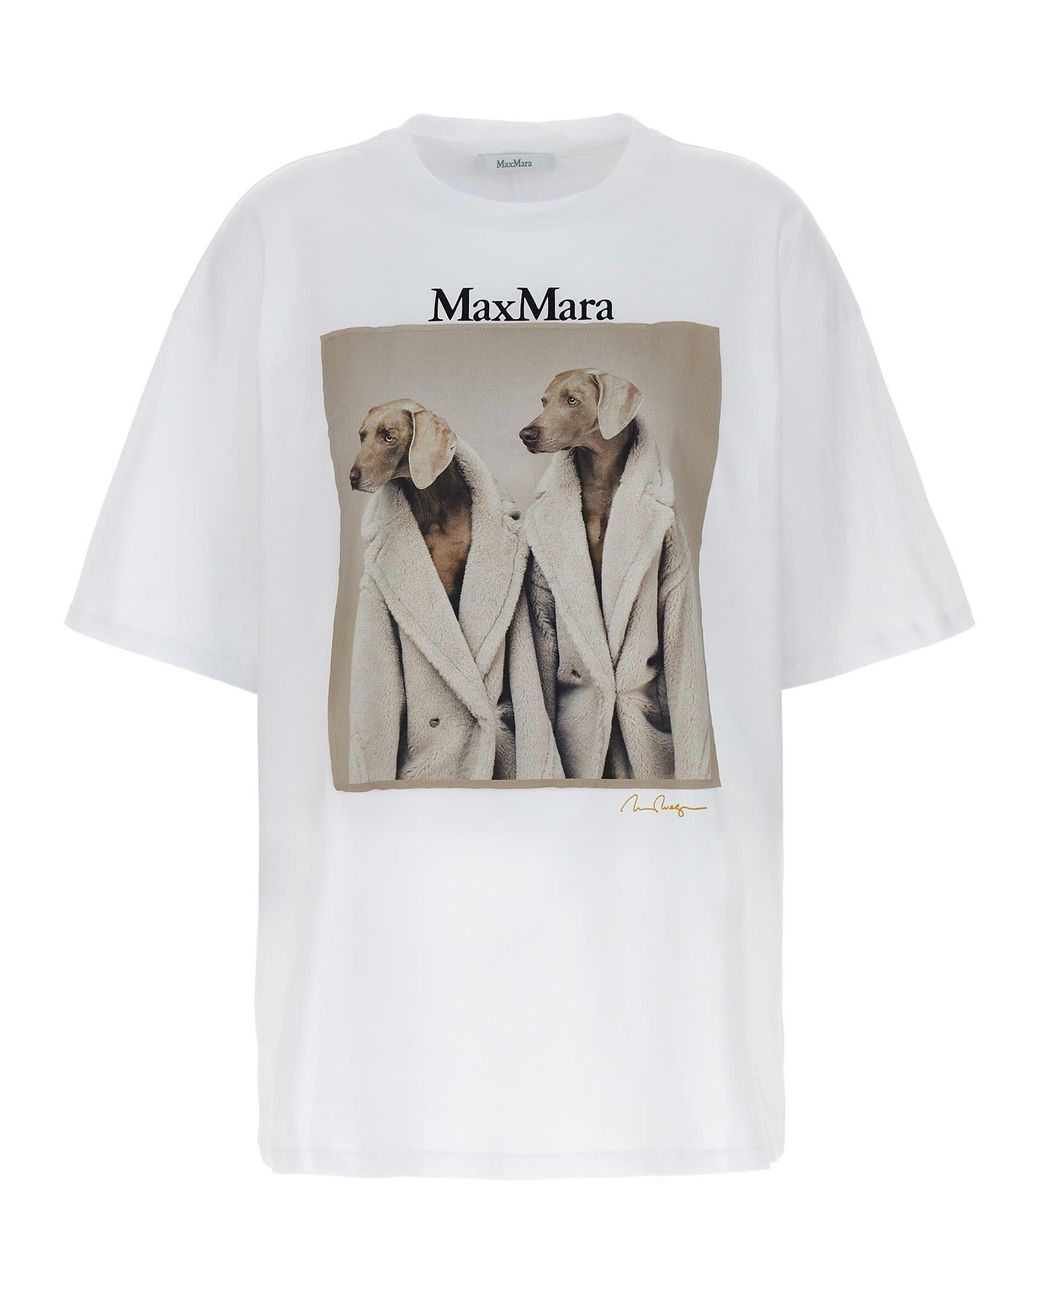 Max Mara Tacco T-shirt in White | Lyst